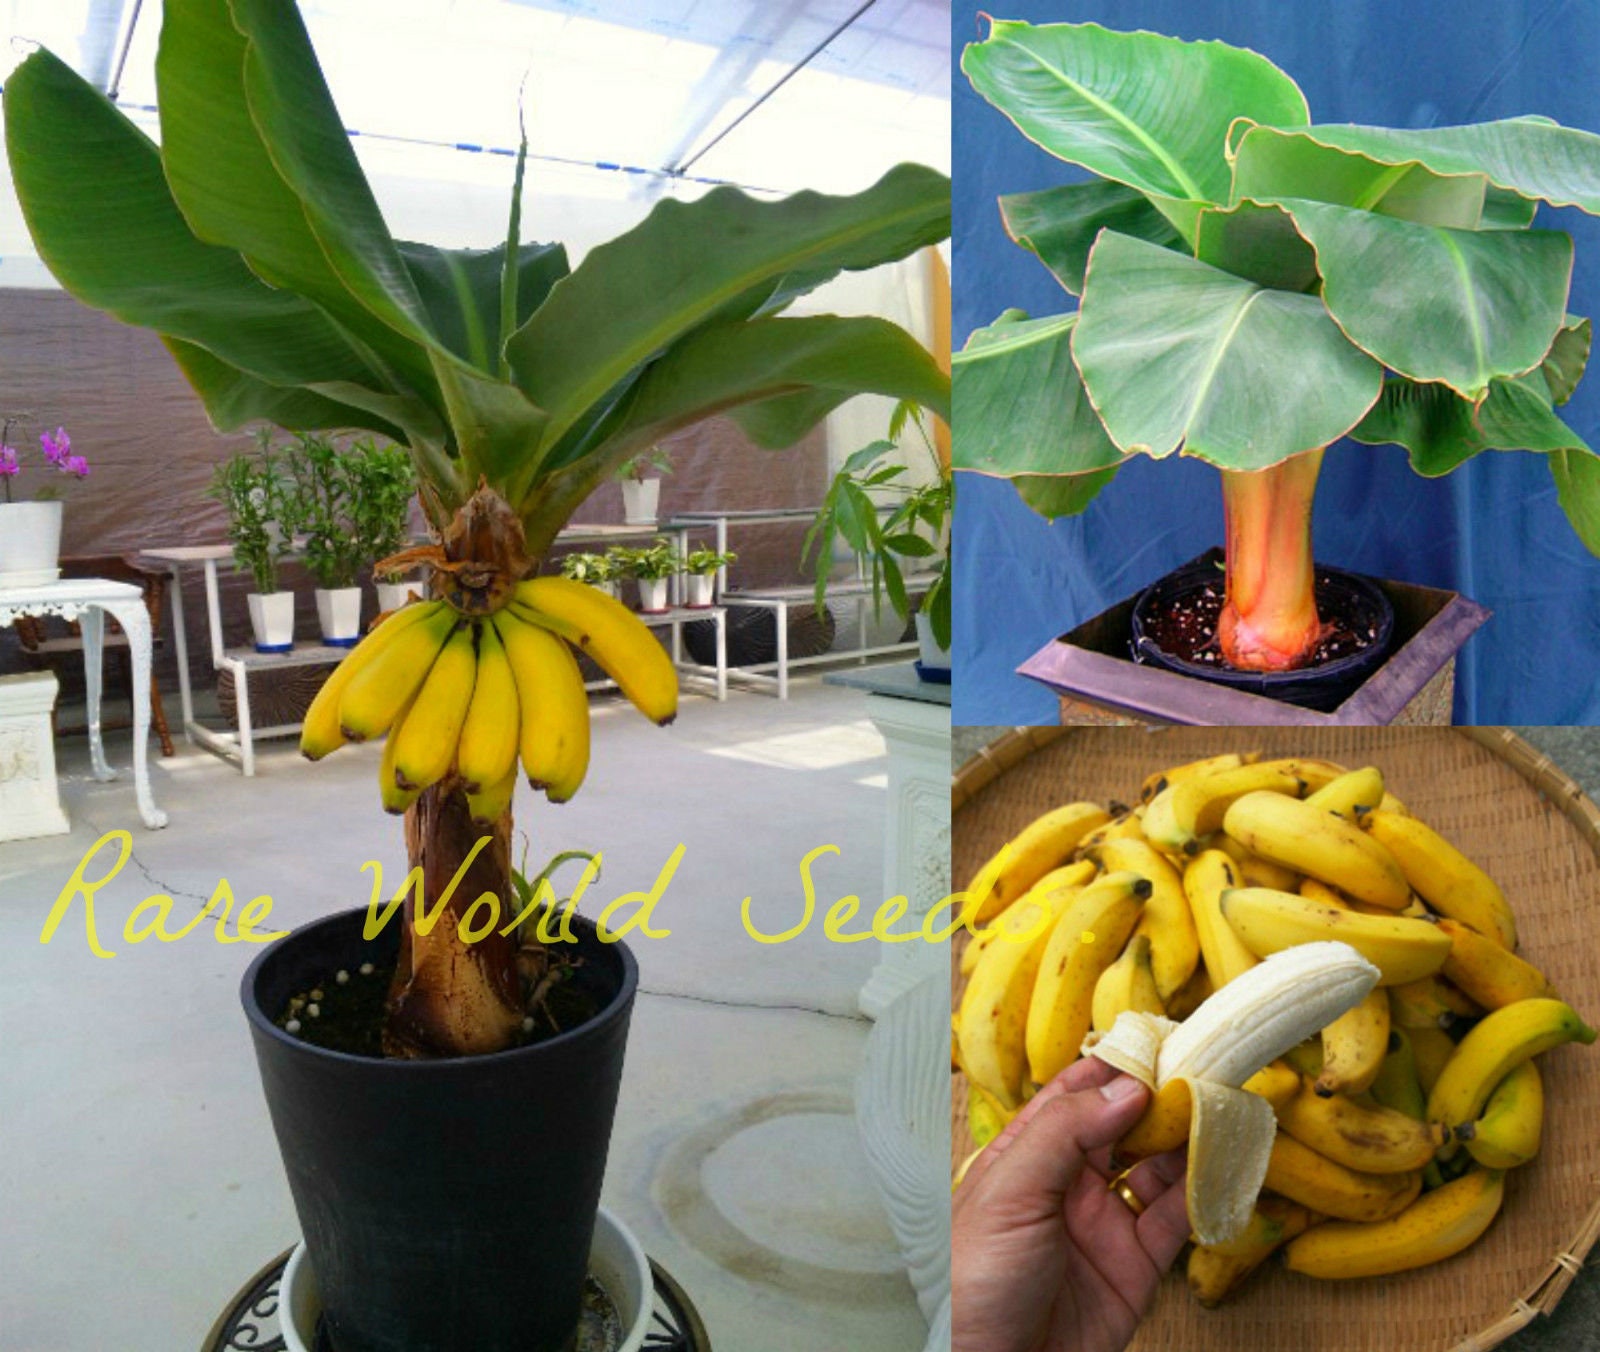 dwarf musa novak grows wish smallest banane bananas bananenbaum skillofking